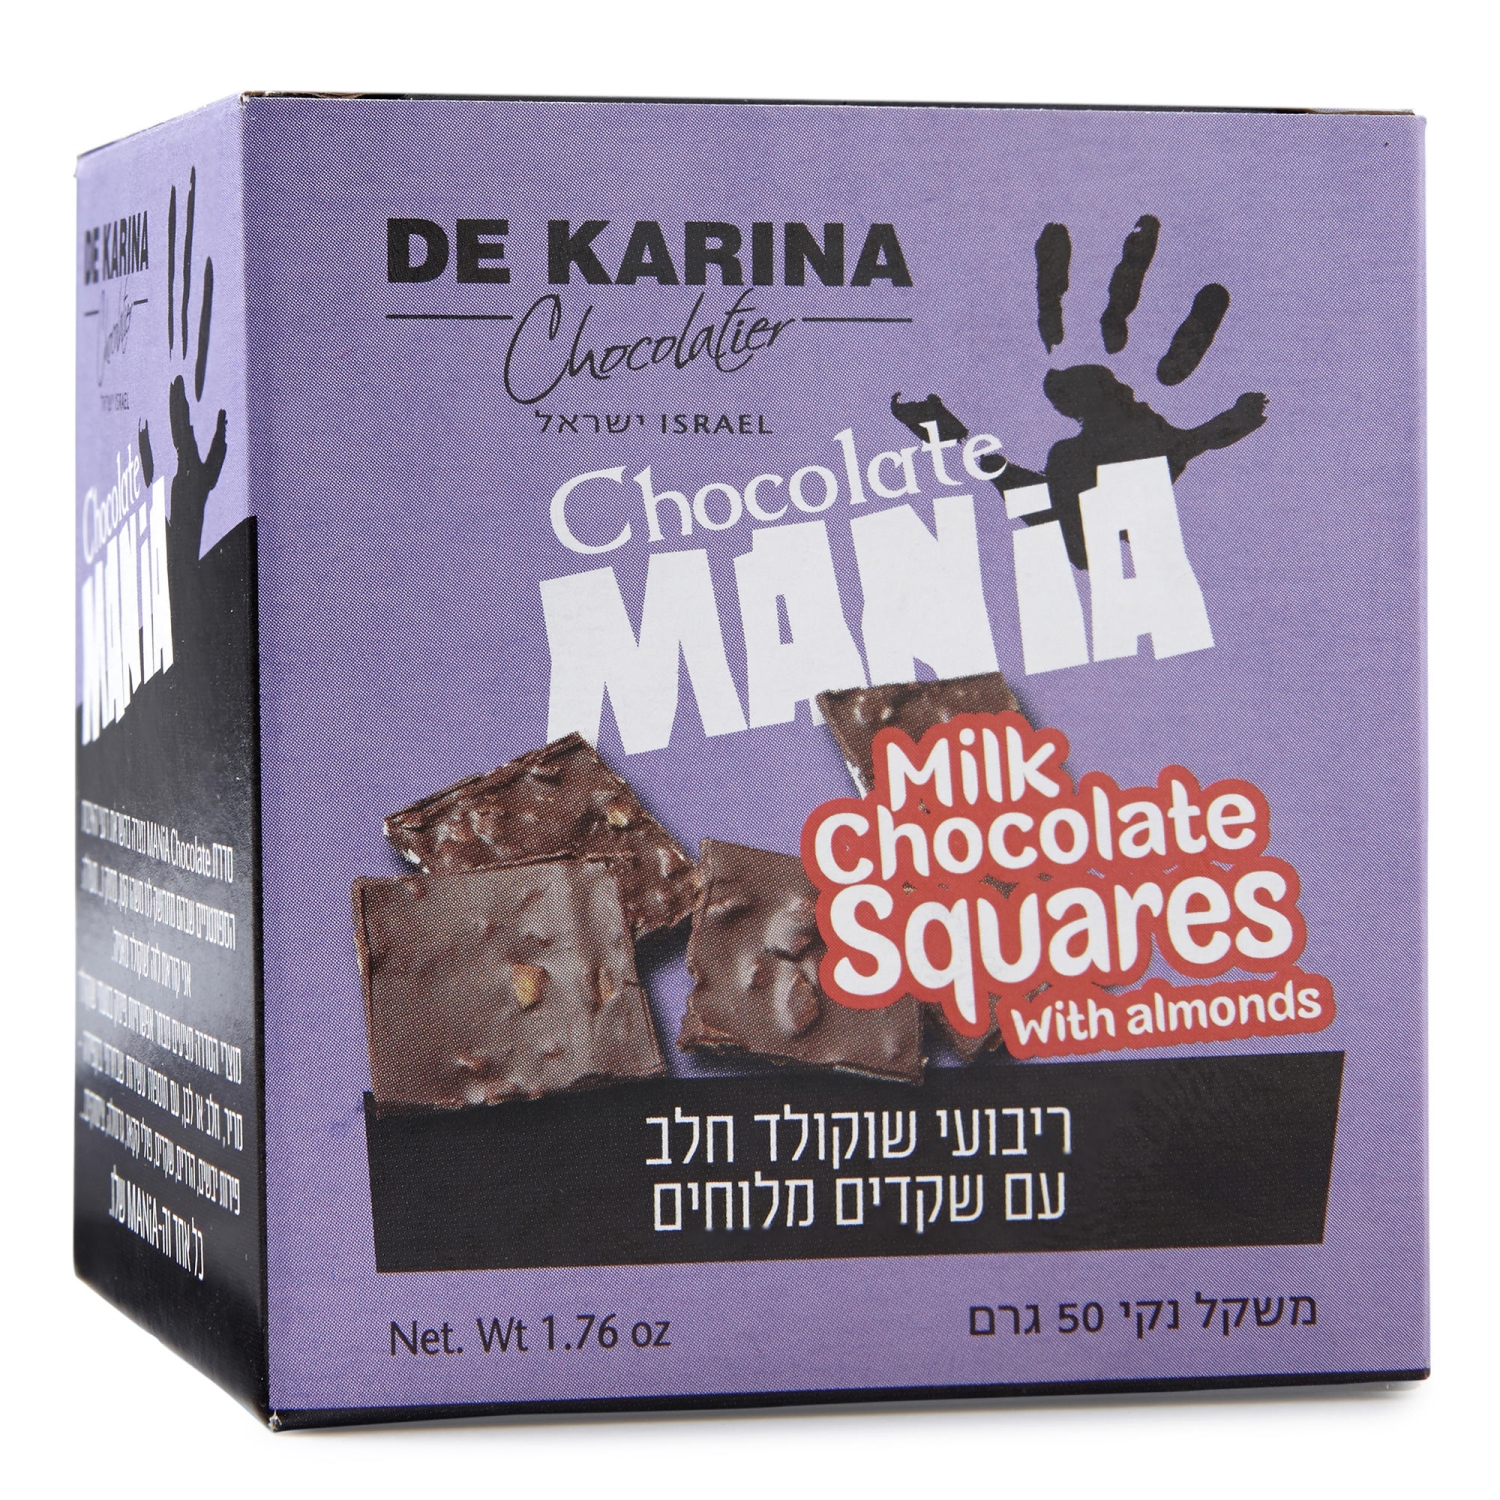 De Karina Mania Milk Chocolate Squares with Almonds - 1